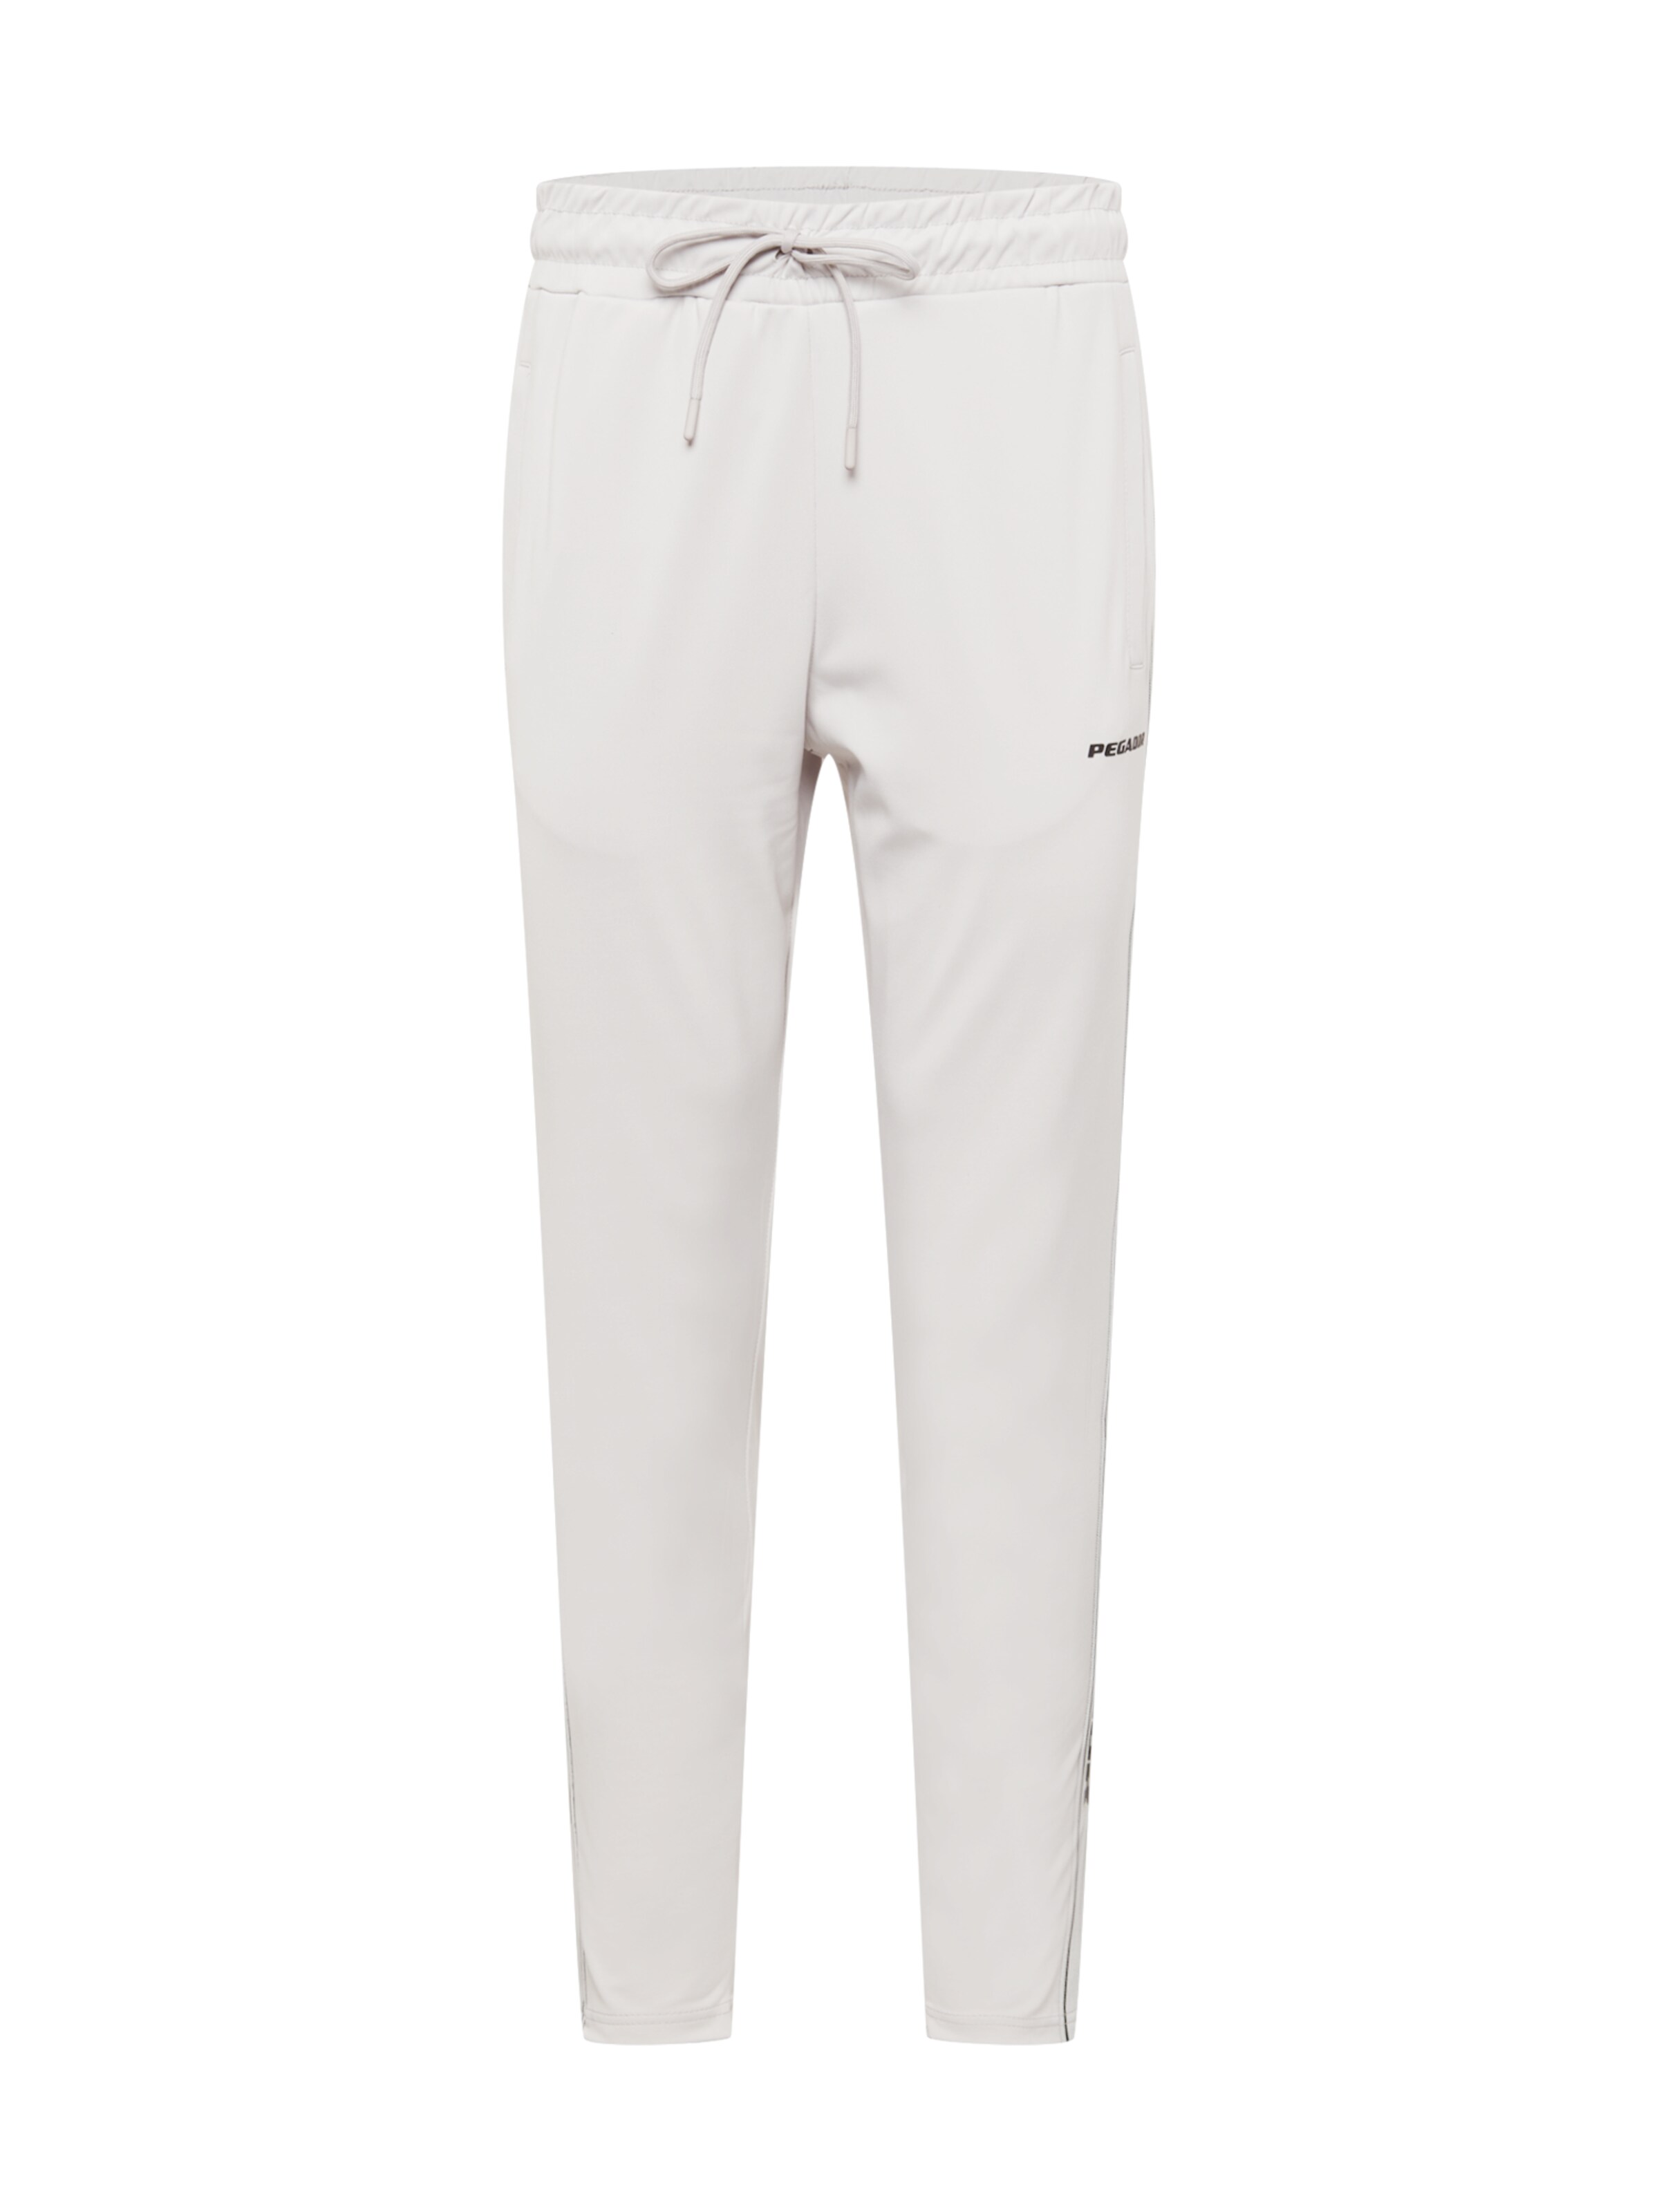 Pantaloni Uomo Pegador Pantaloni in Bianco, Offwhite 